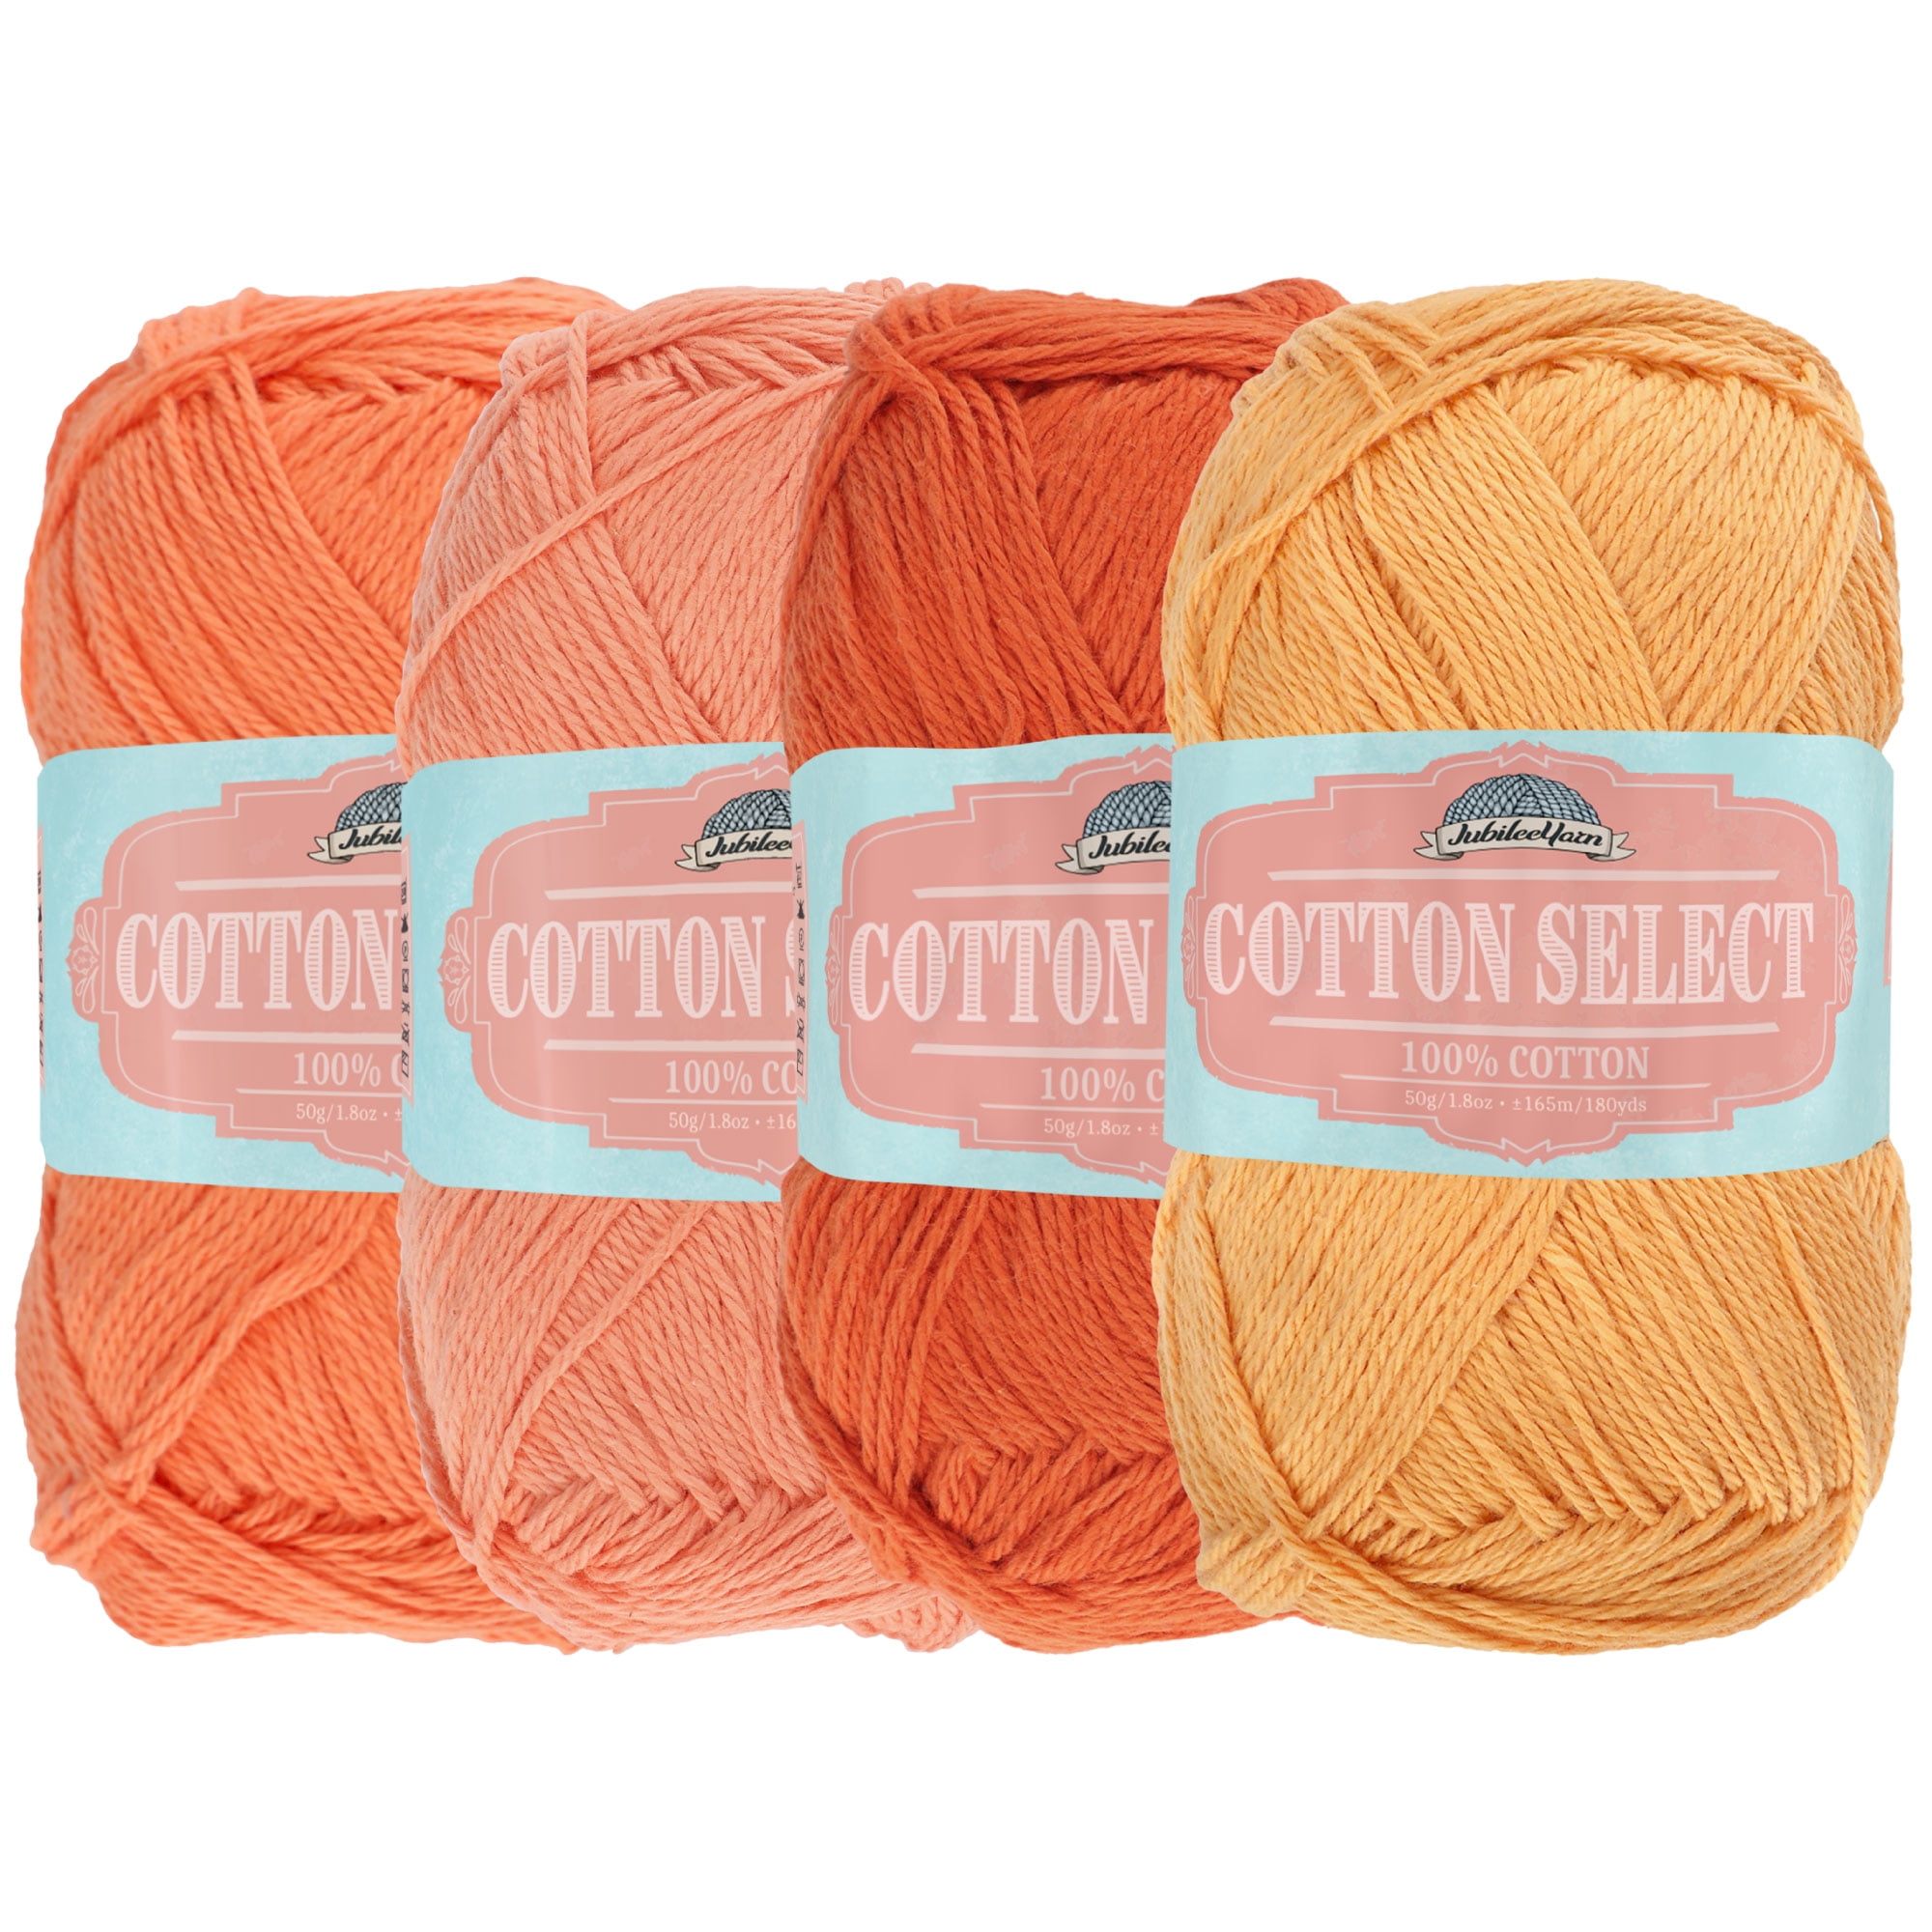  JubileeYarn Cotton Select Yarn - Sport Weight - 50g/Skein -  Shades of Green - 4 Skeins